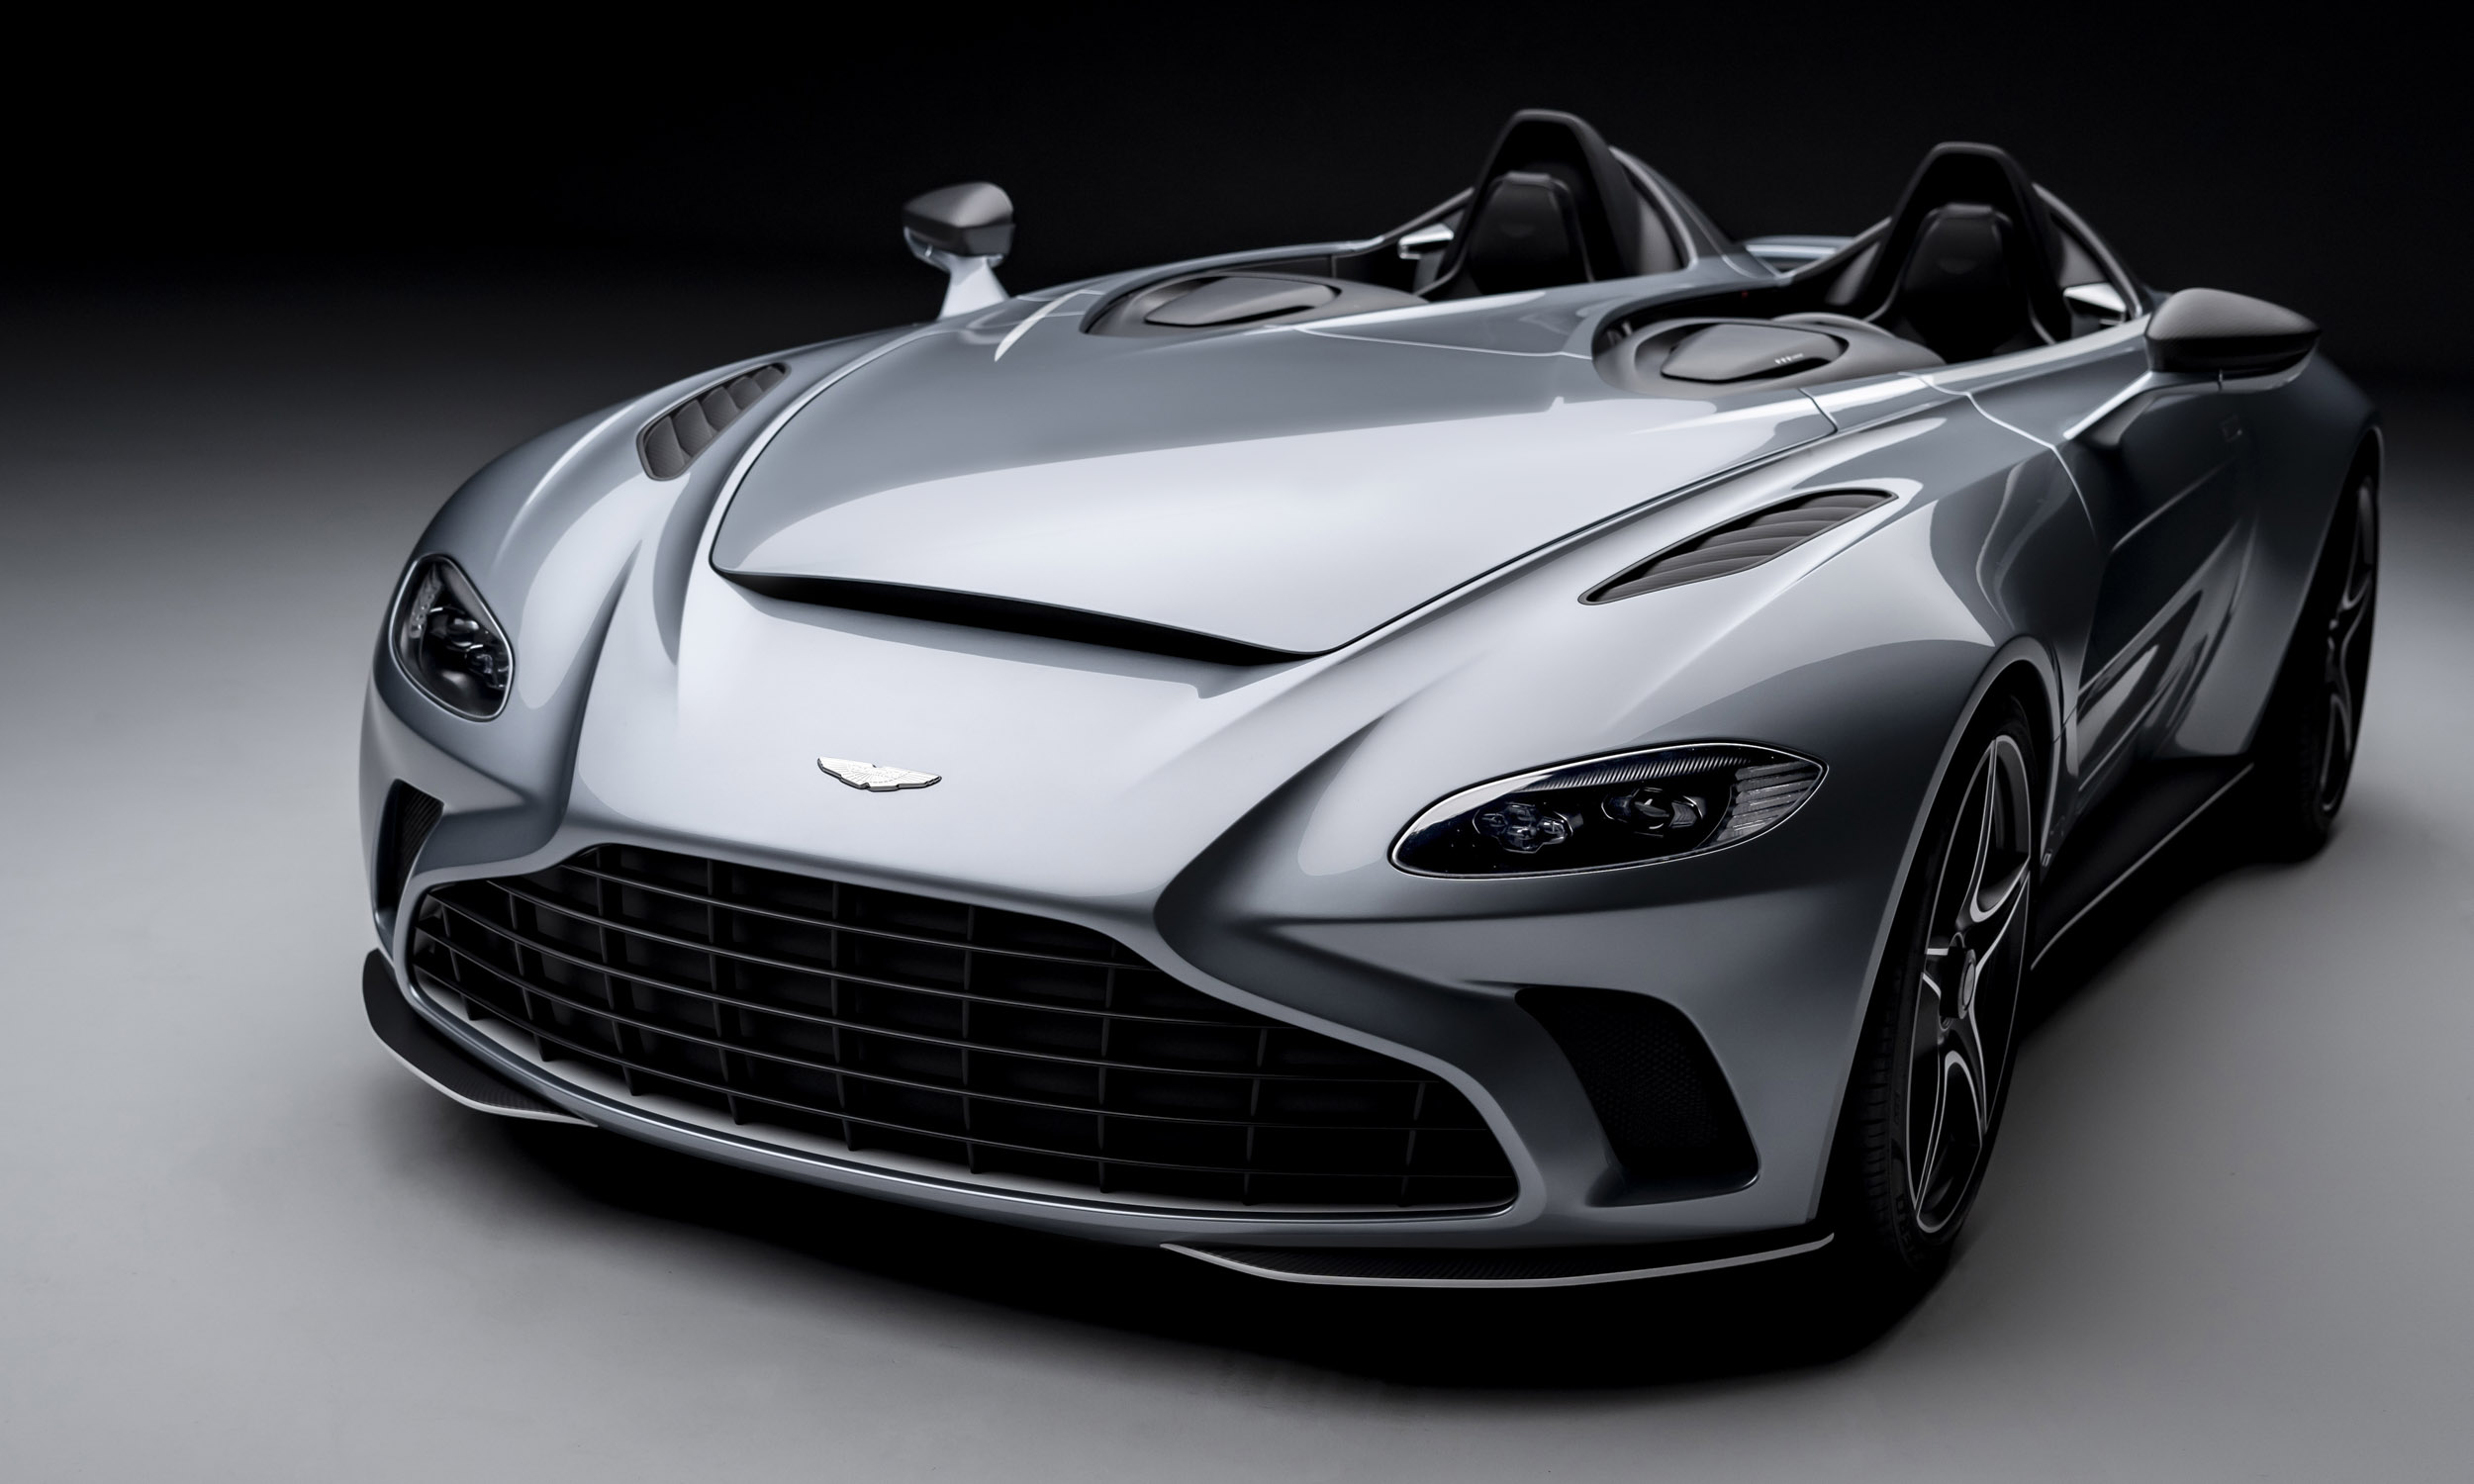 Aston Martin V12 Speedster: First Look